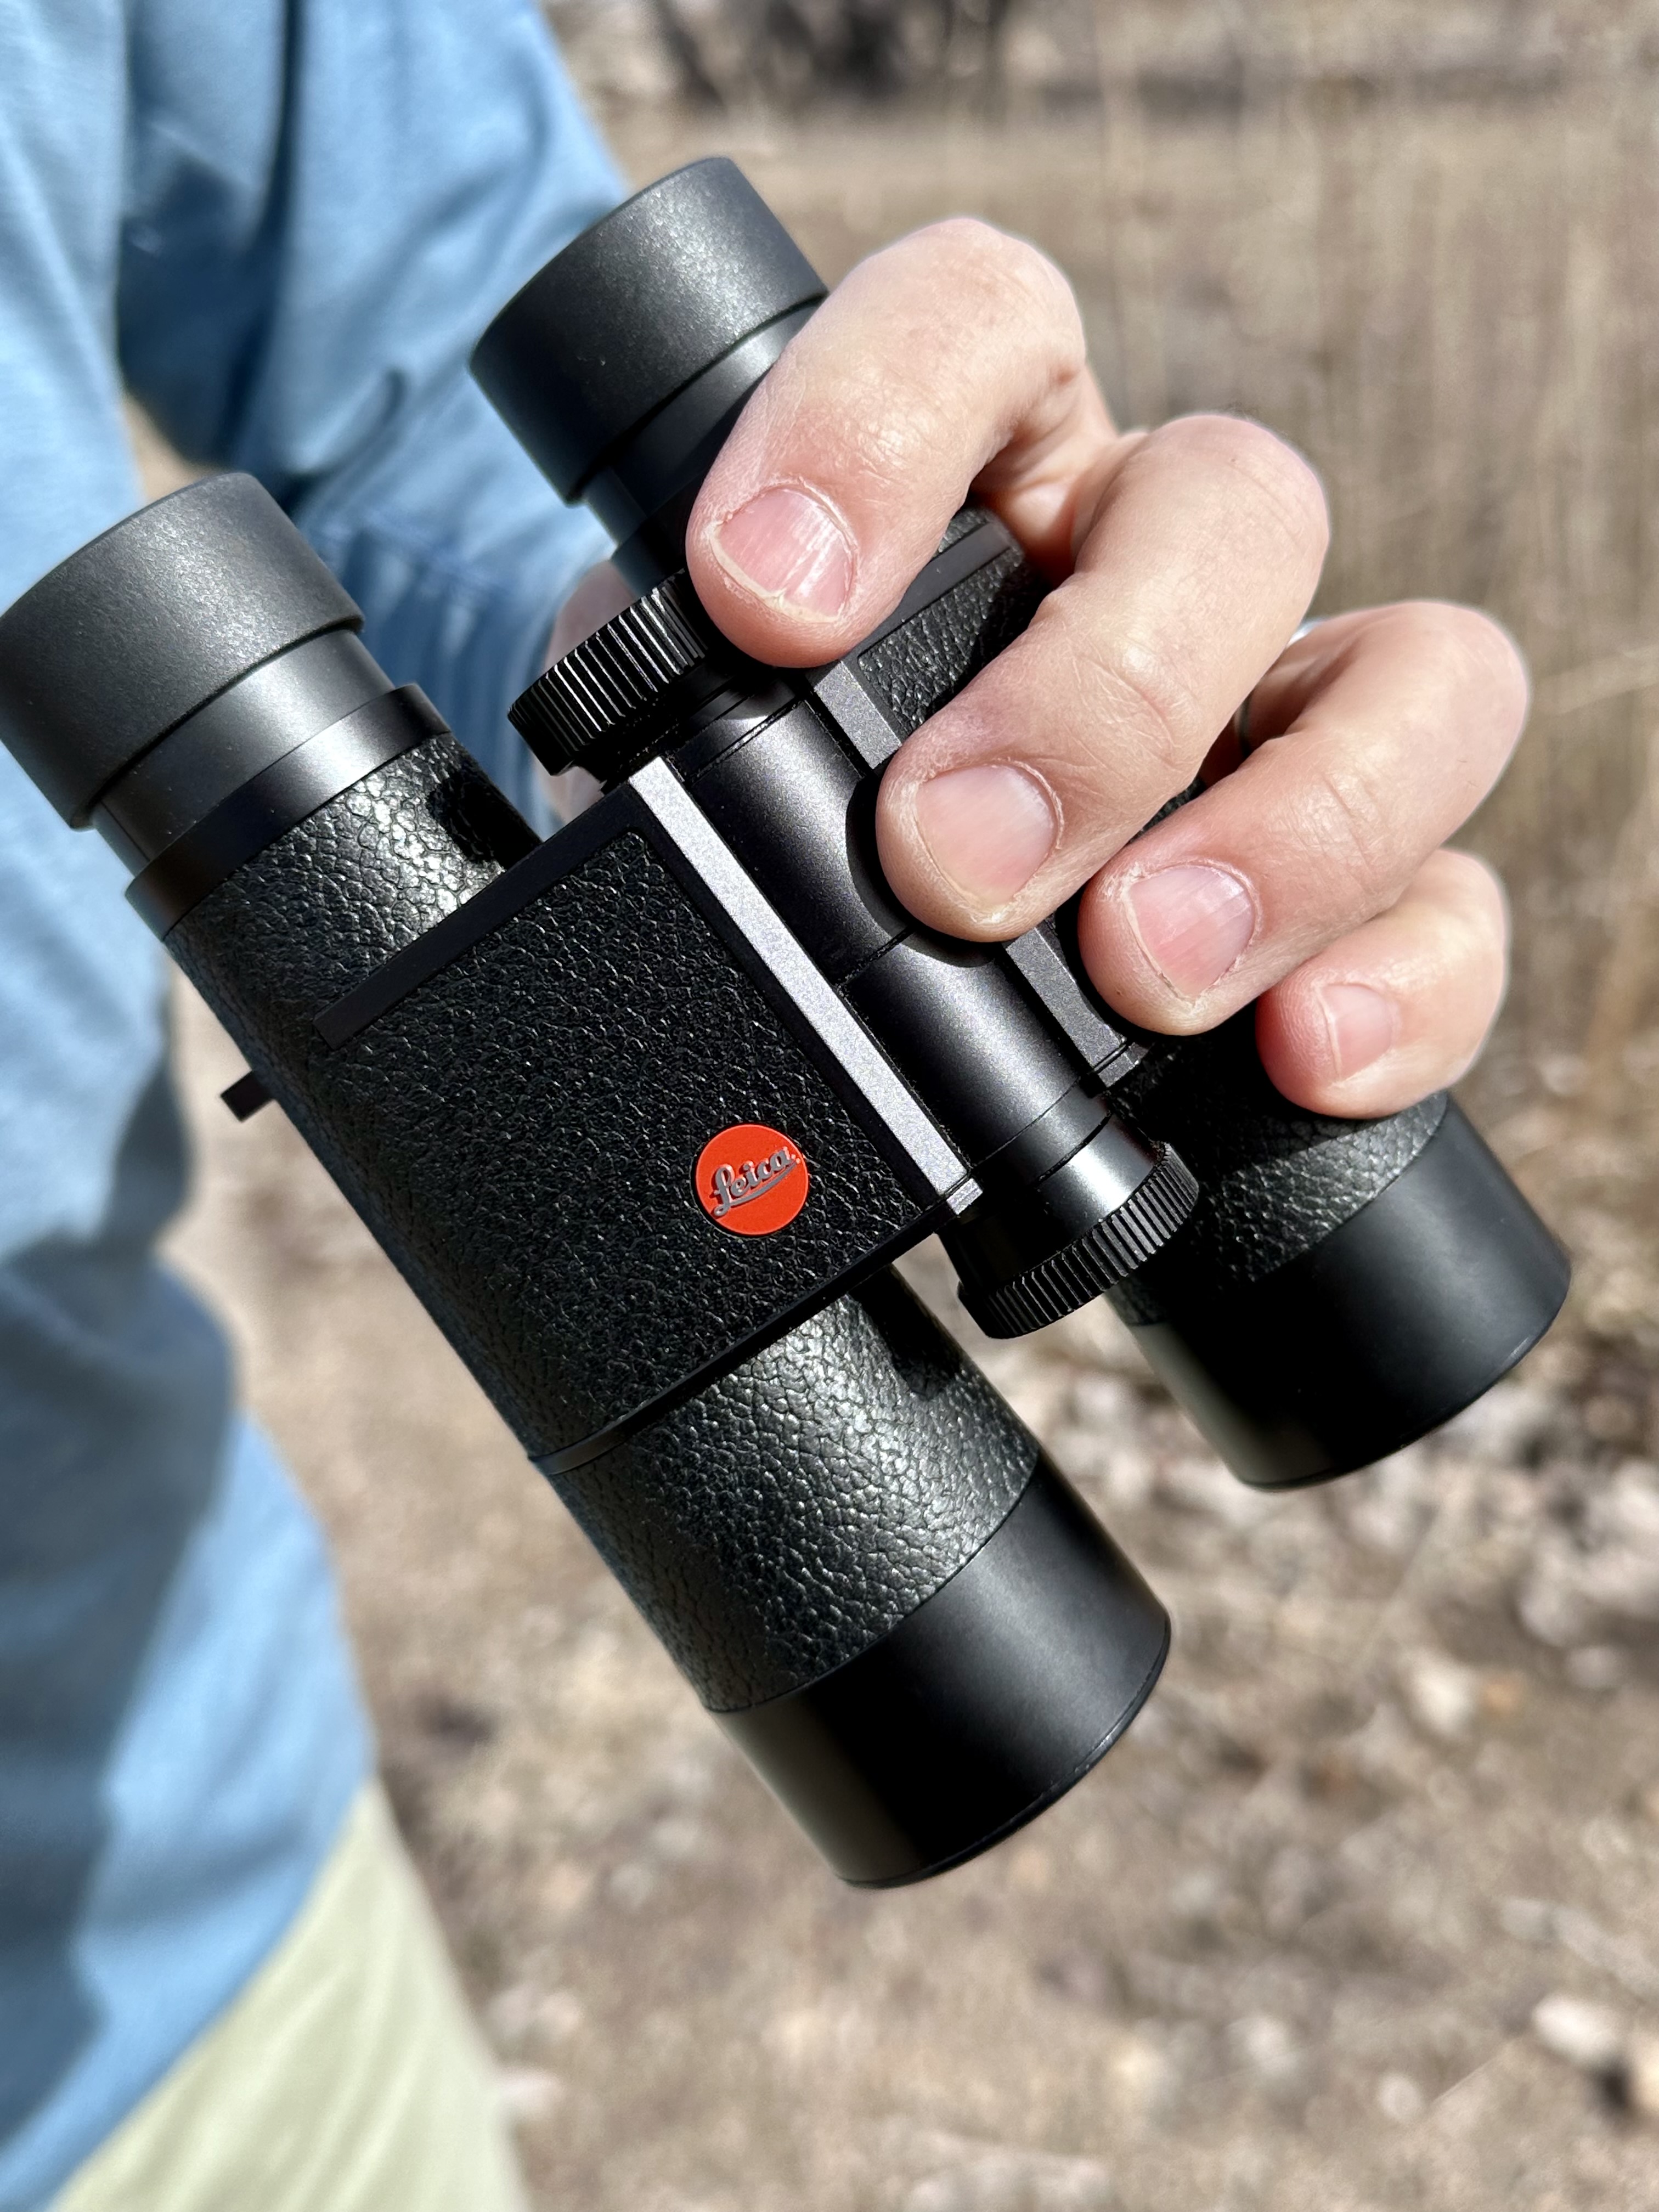 The Leica Trinovid bird watching binoculars.